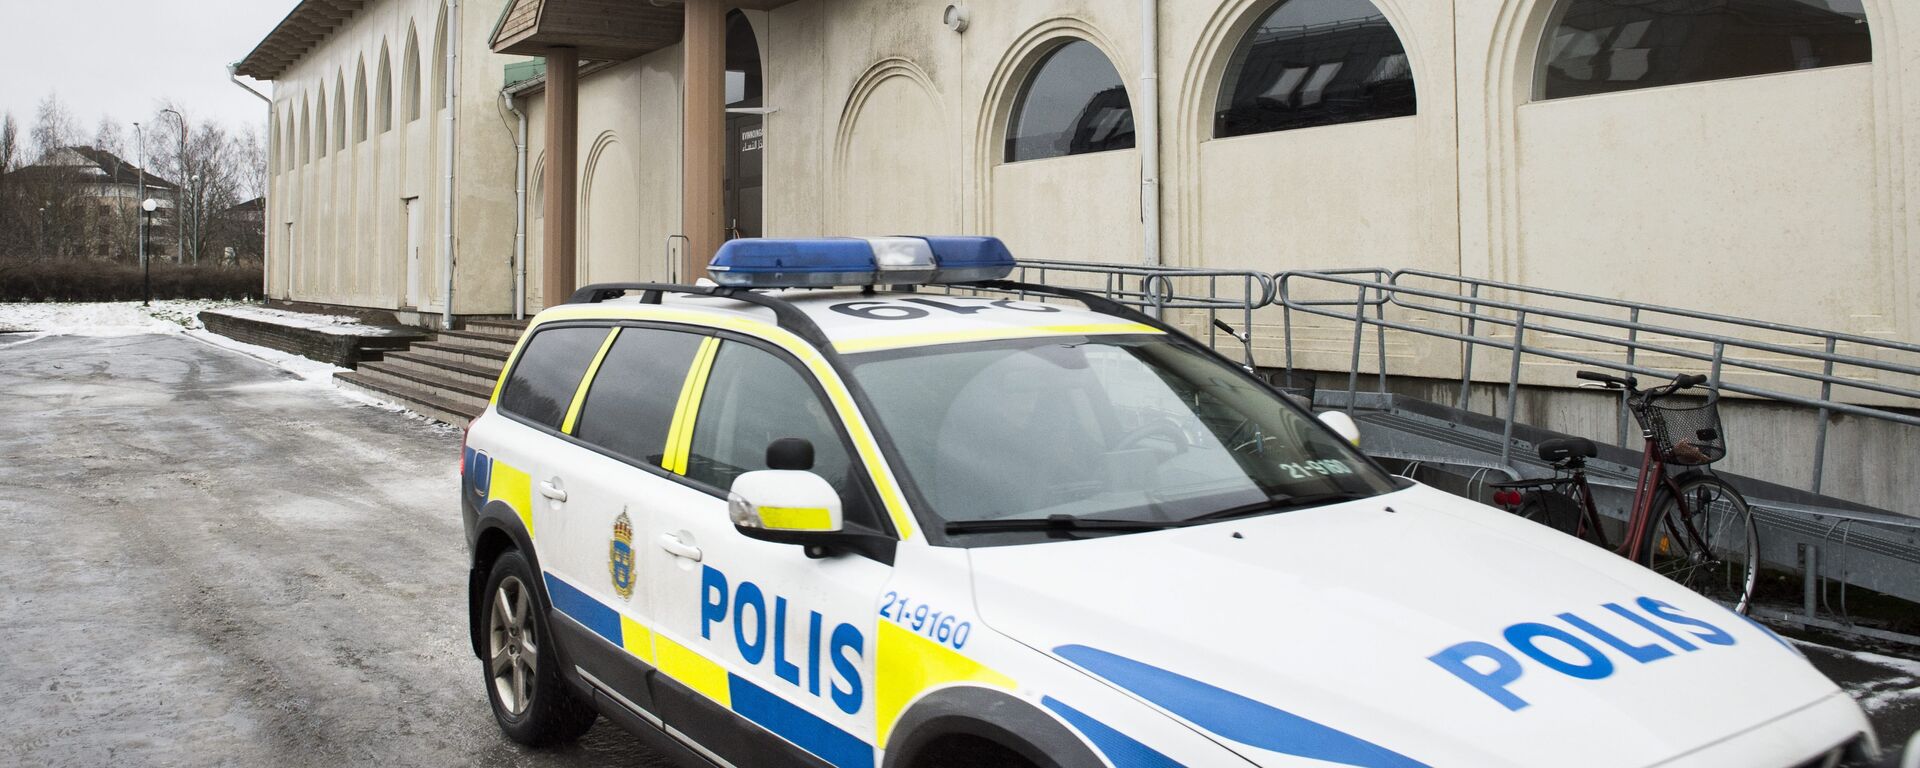 (File) A police car is parked in front of a mosque in Uppsala, Sweden Thursday Jan. 1, 2015 - Sputnik International, 1920, 23.09.2021